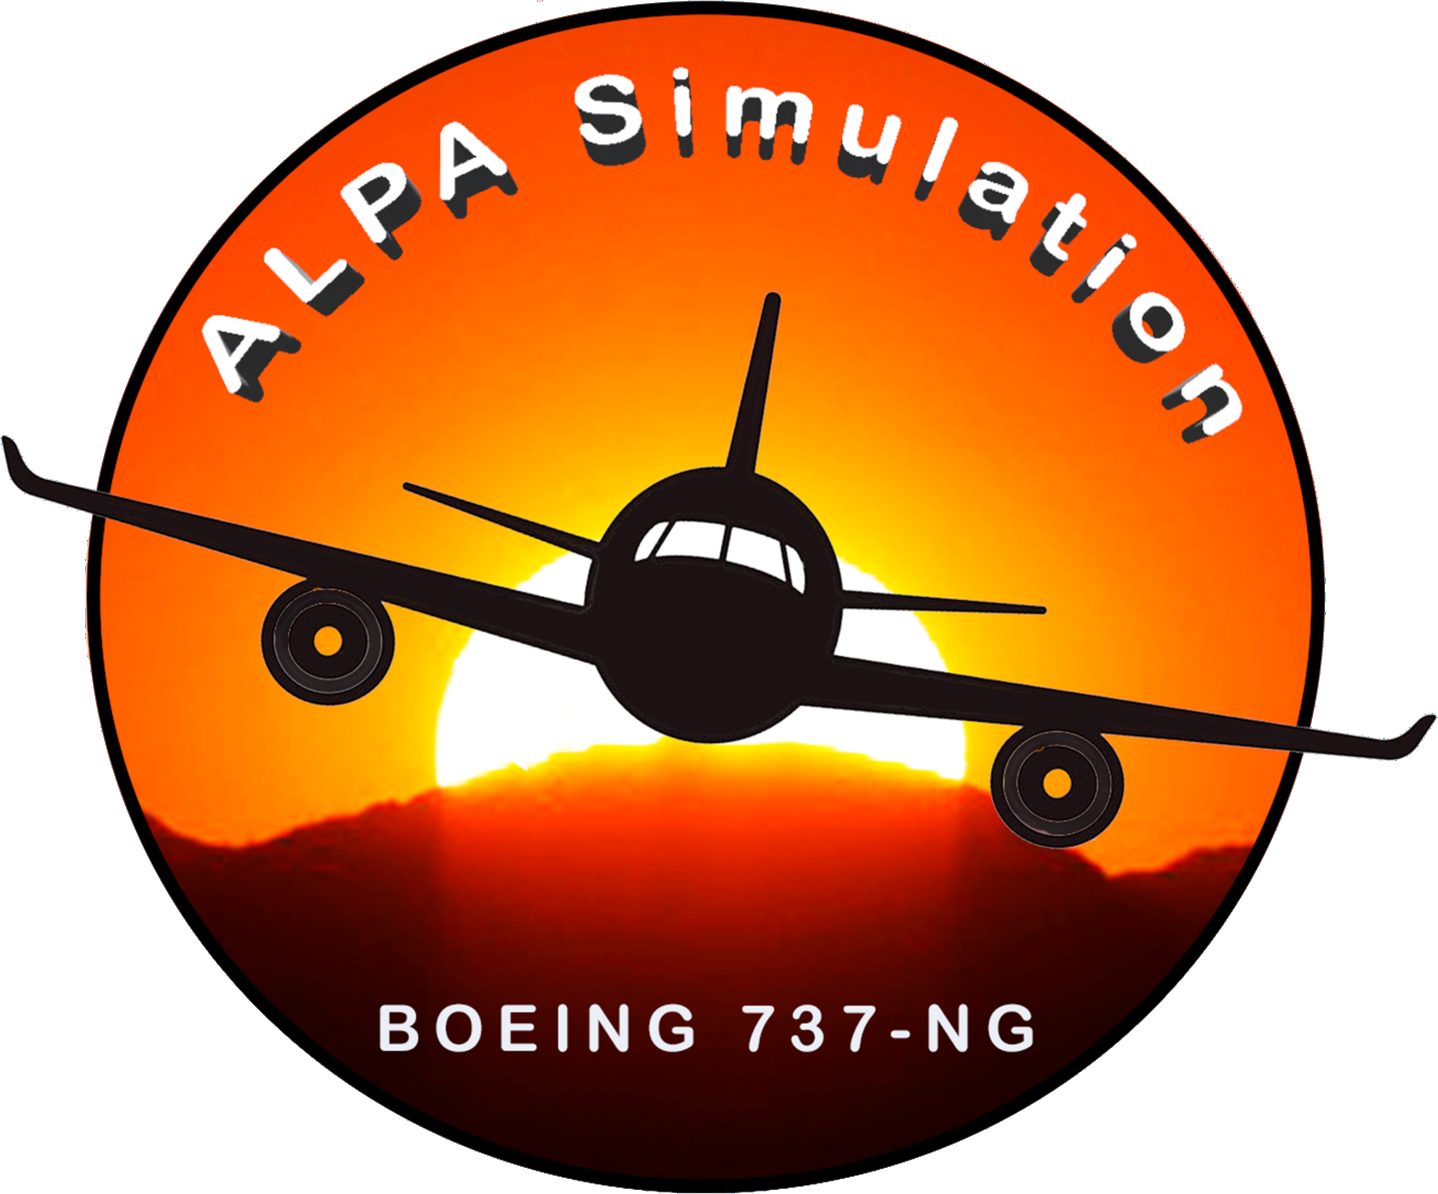 ALPA Simulation, 737 flight simulator in Hampshire